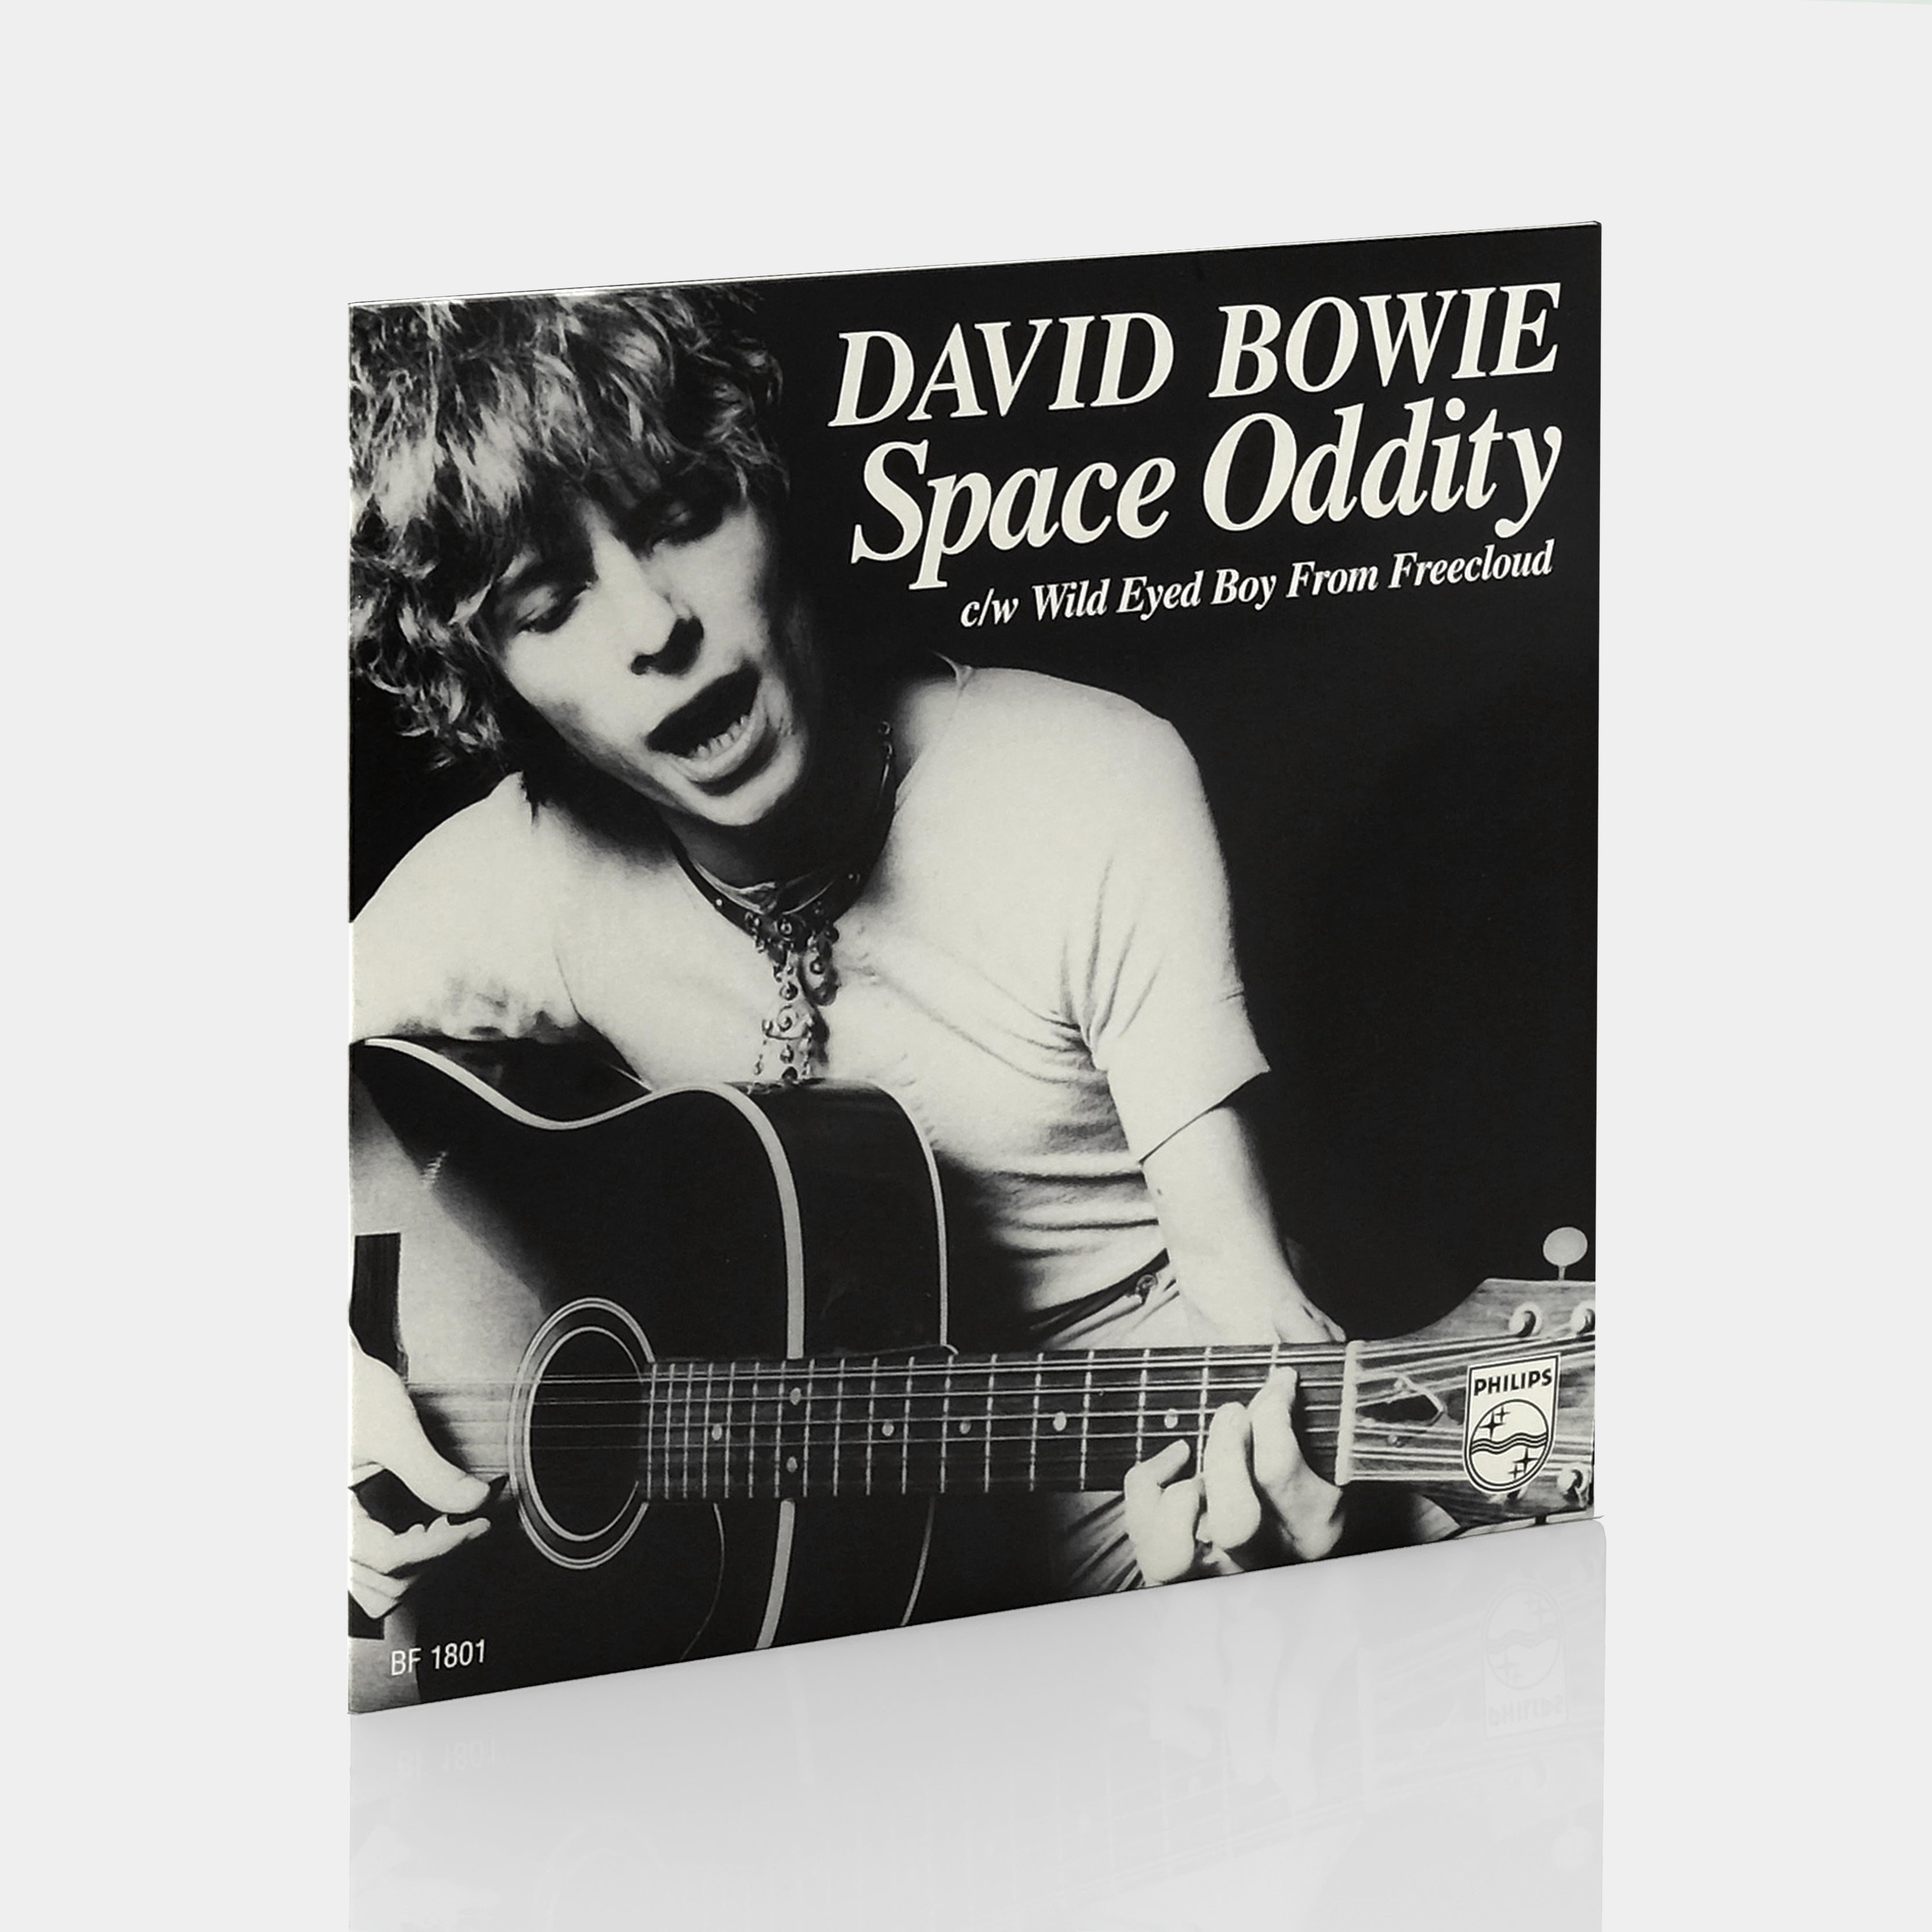 David Bowie - Space Oddity 2x7" Single Vinyl Record